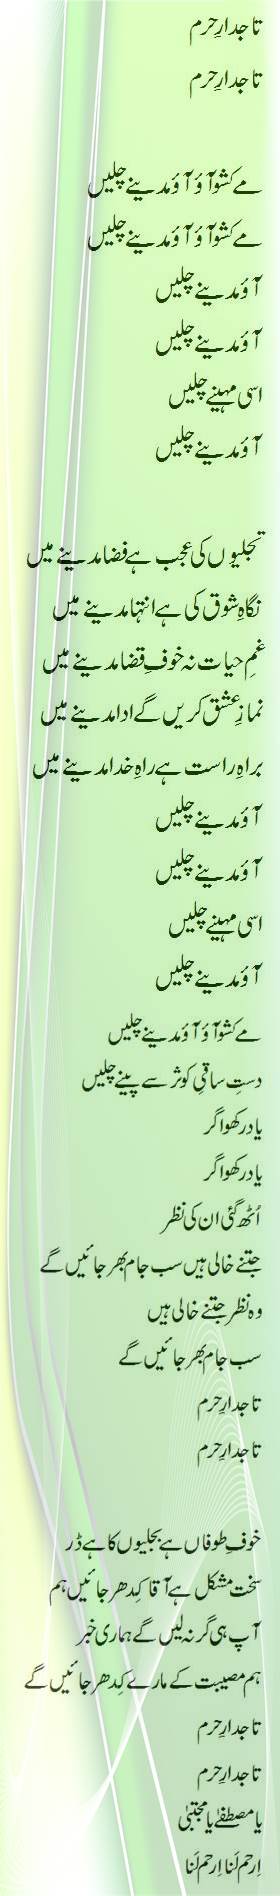 Tjadar e Haram lyrics in Urdu 2